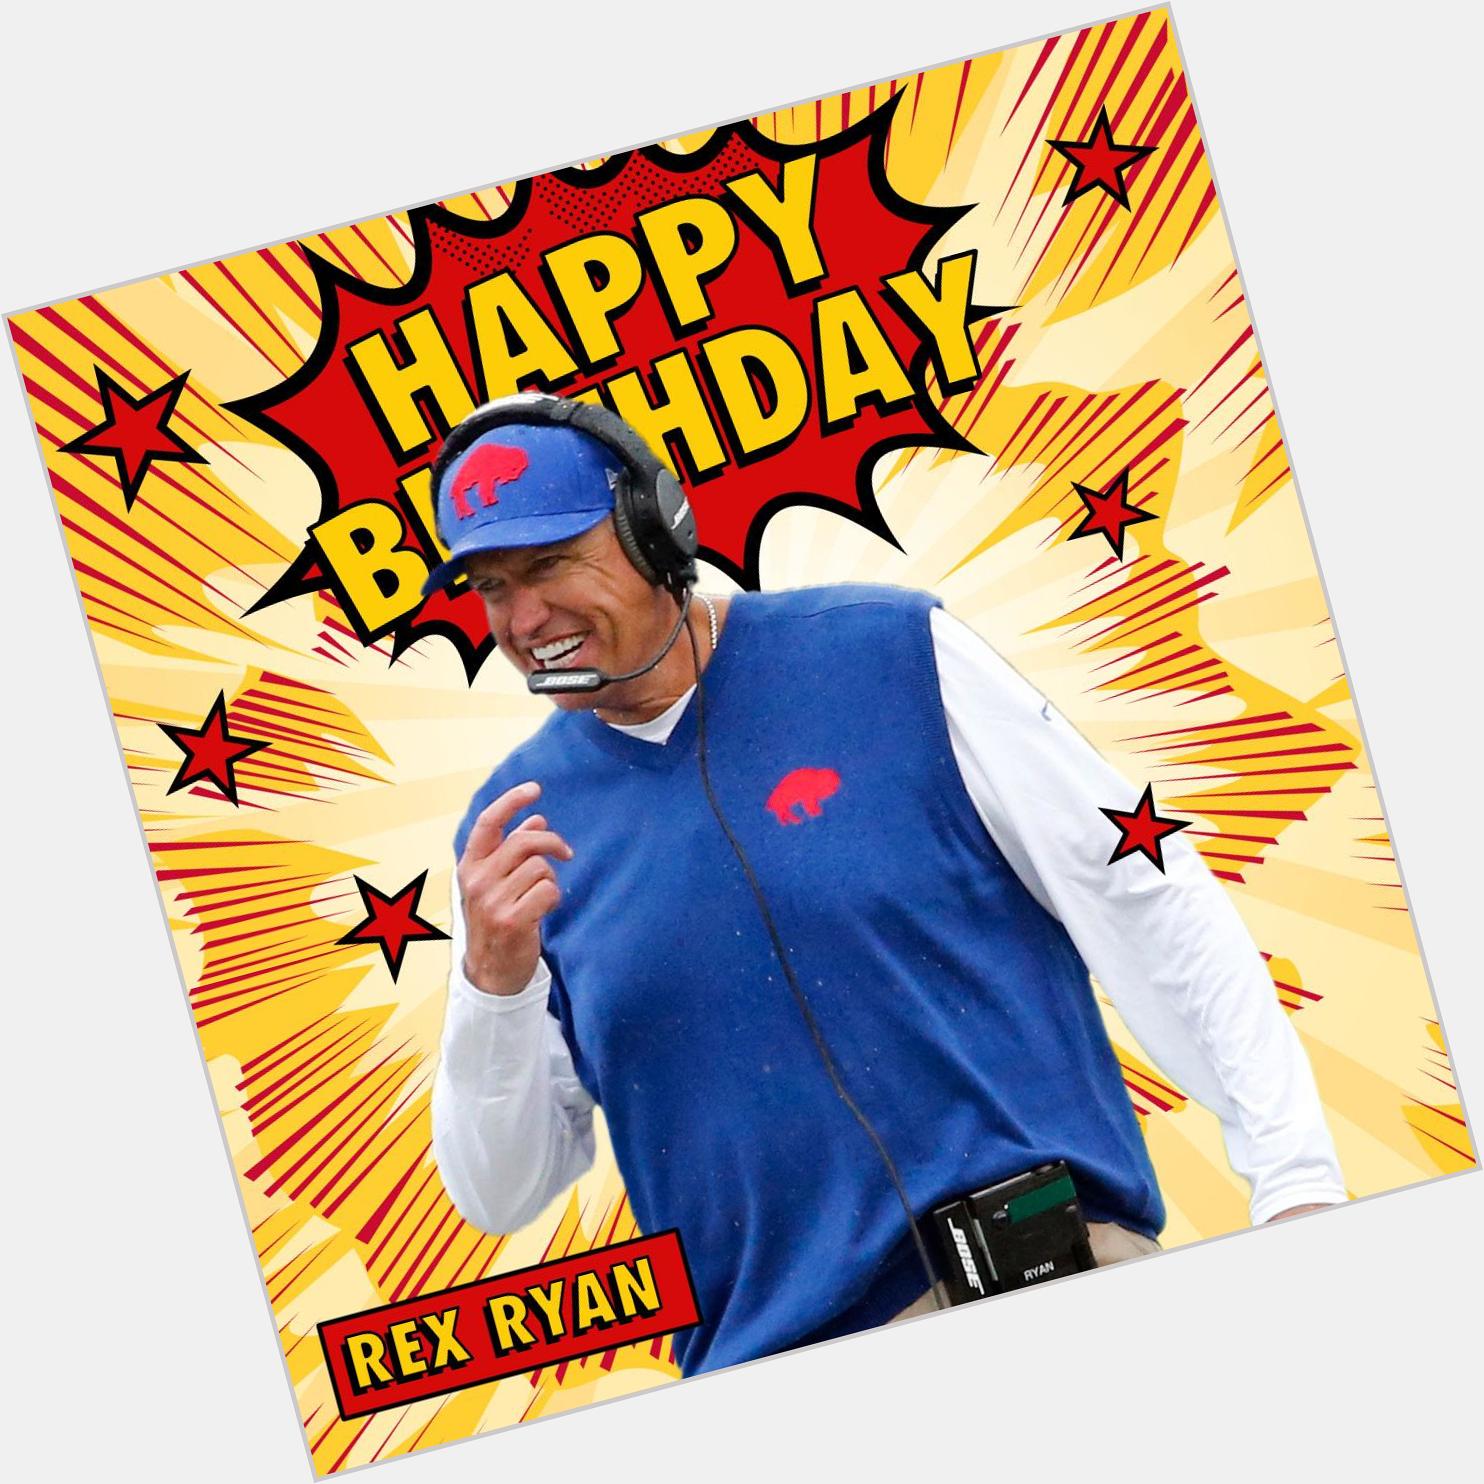 To wish buffalobills HC Rex Ryan a Happy Birthday! 